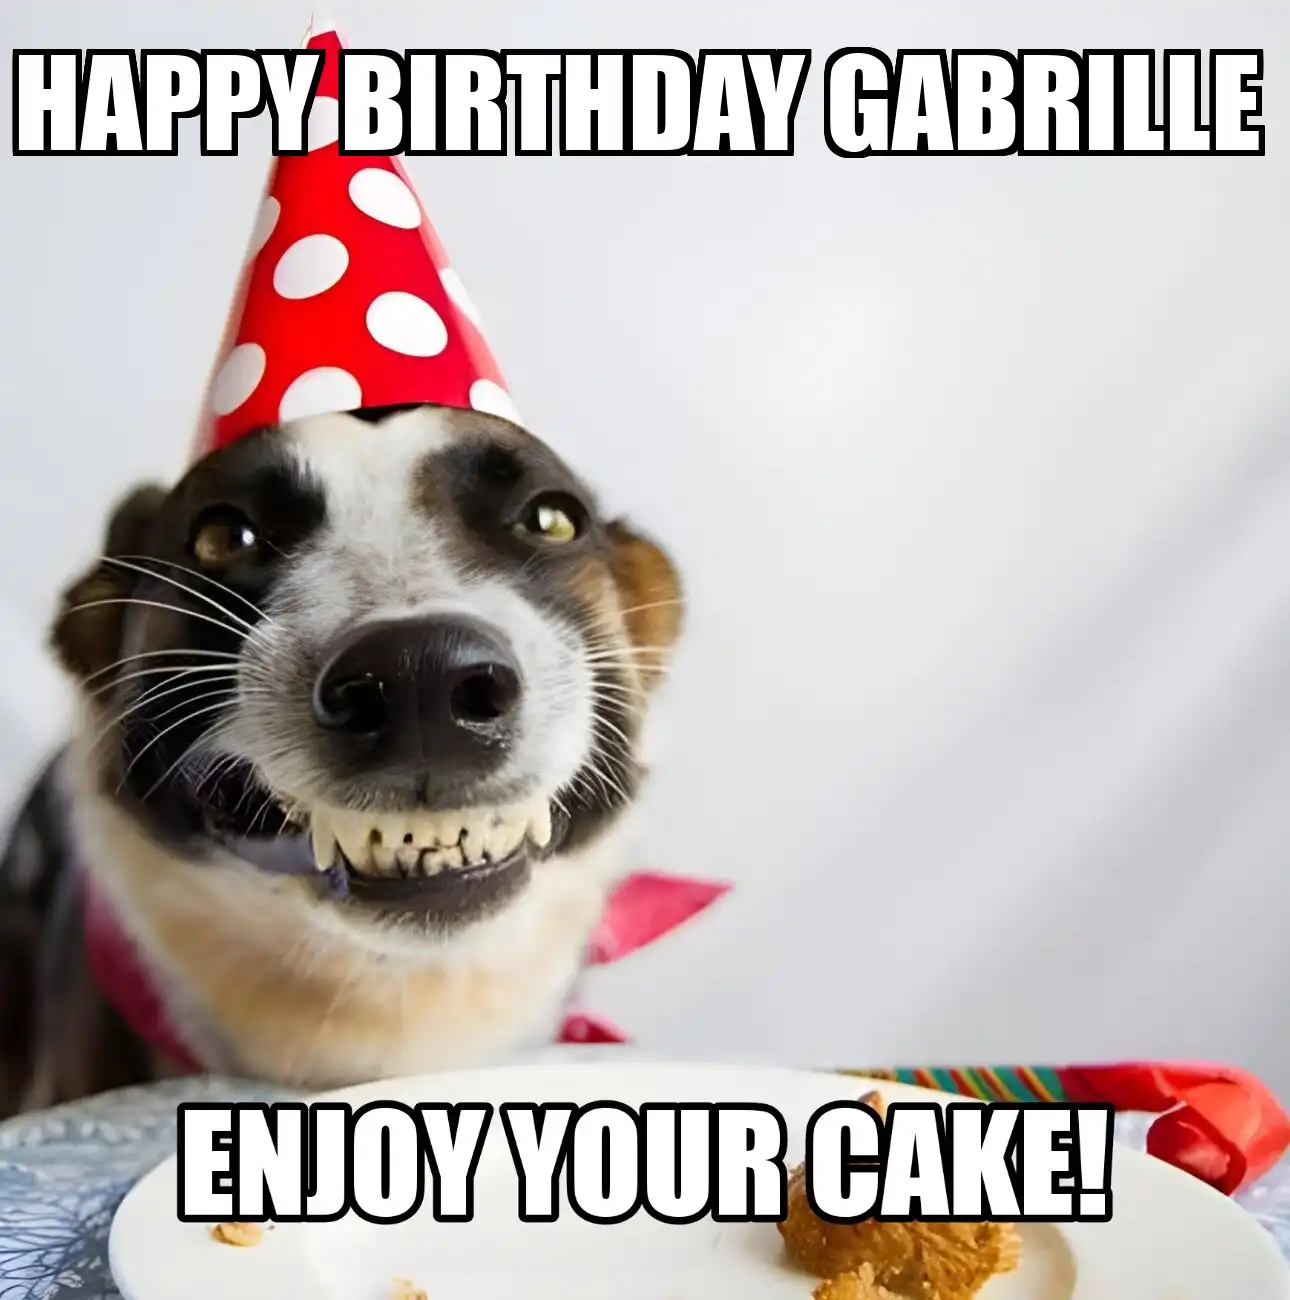 Happy Birthday Gabrille Enjoy Your Cake Dog Meme